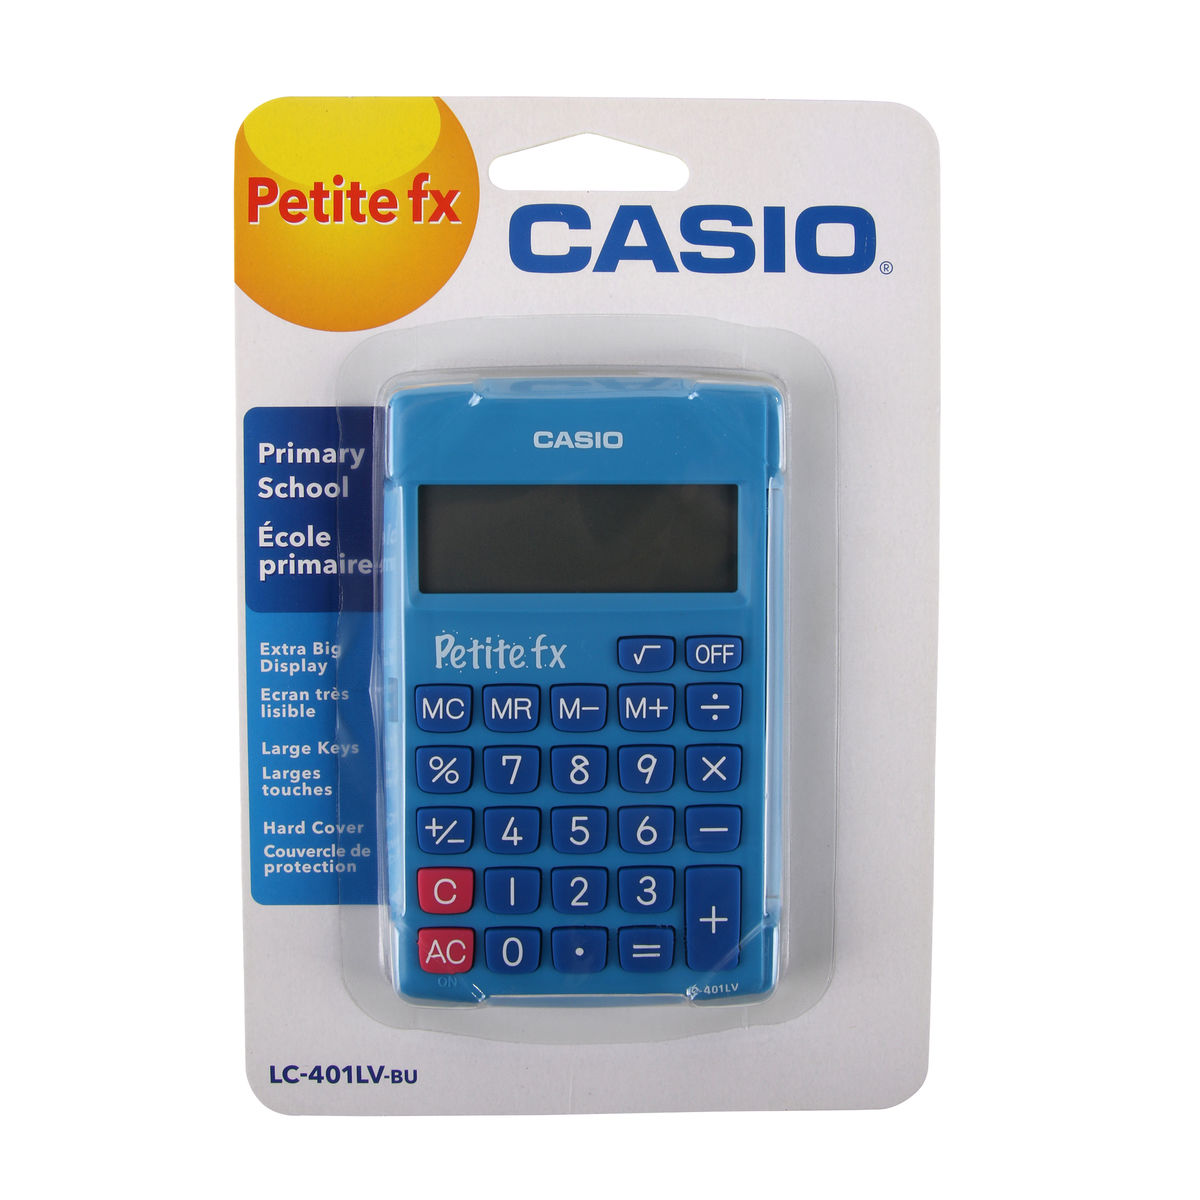 Casio Ecole primaire Calculatrice Petite fx LC-401LV Bleu